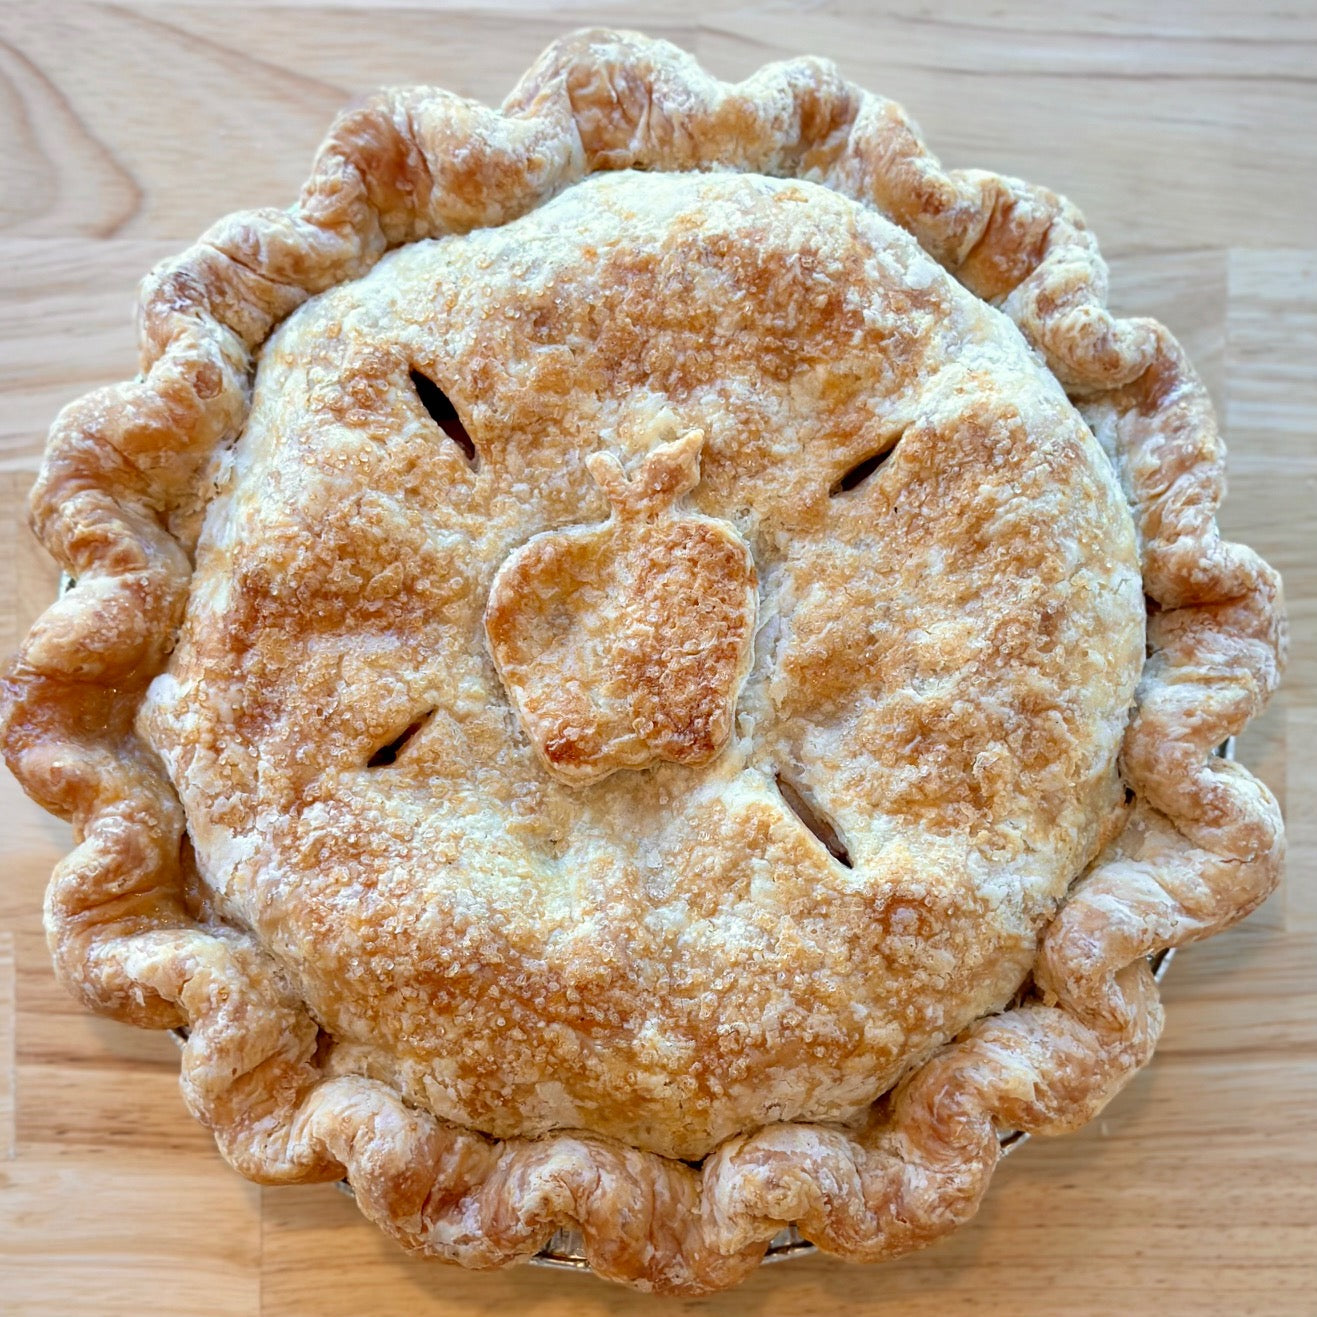 Pie - Apple "Mom's Apple" aka The Classic [VEGAN Option] - 10”